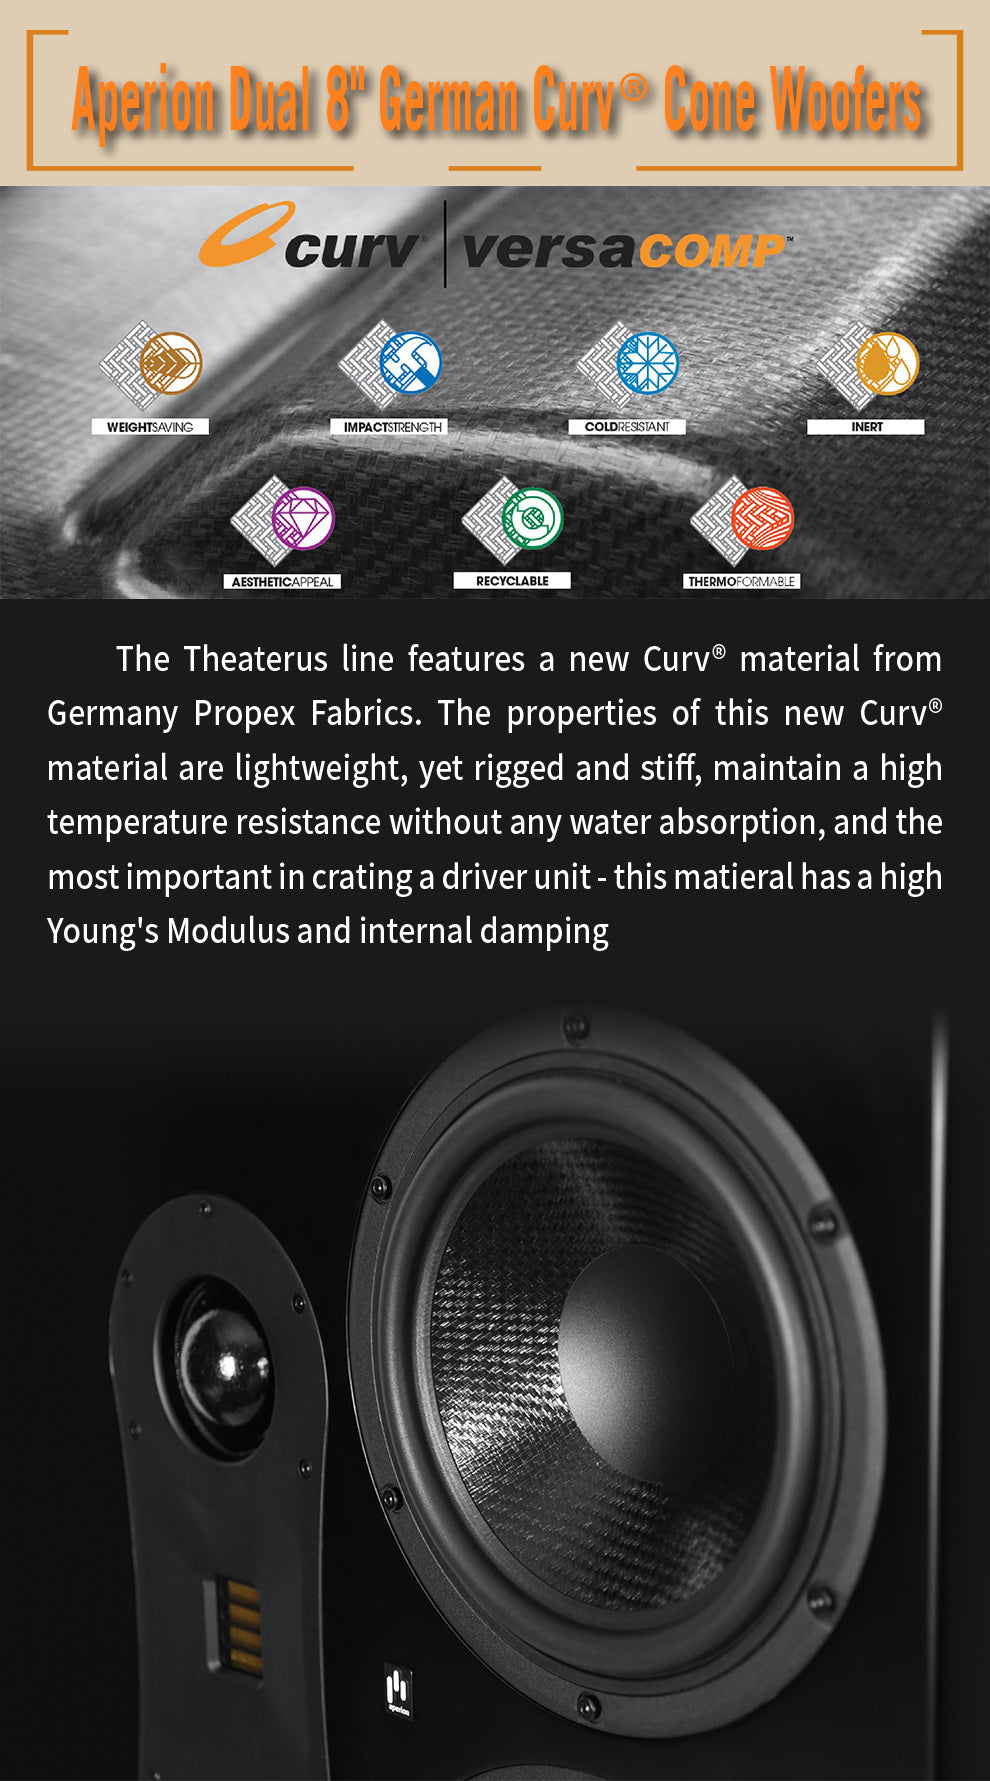 Aperionaudio Theatrus T80S Slim Cinema/Studio AMT Ribbon Tweeter Monitor Speaker